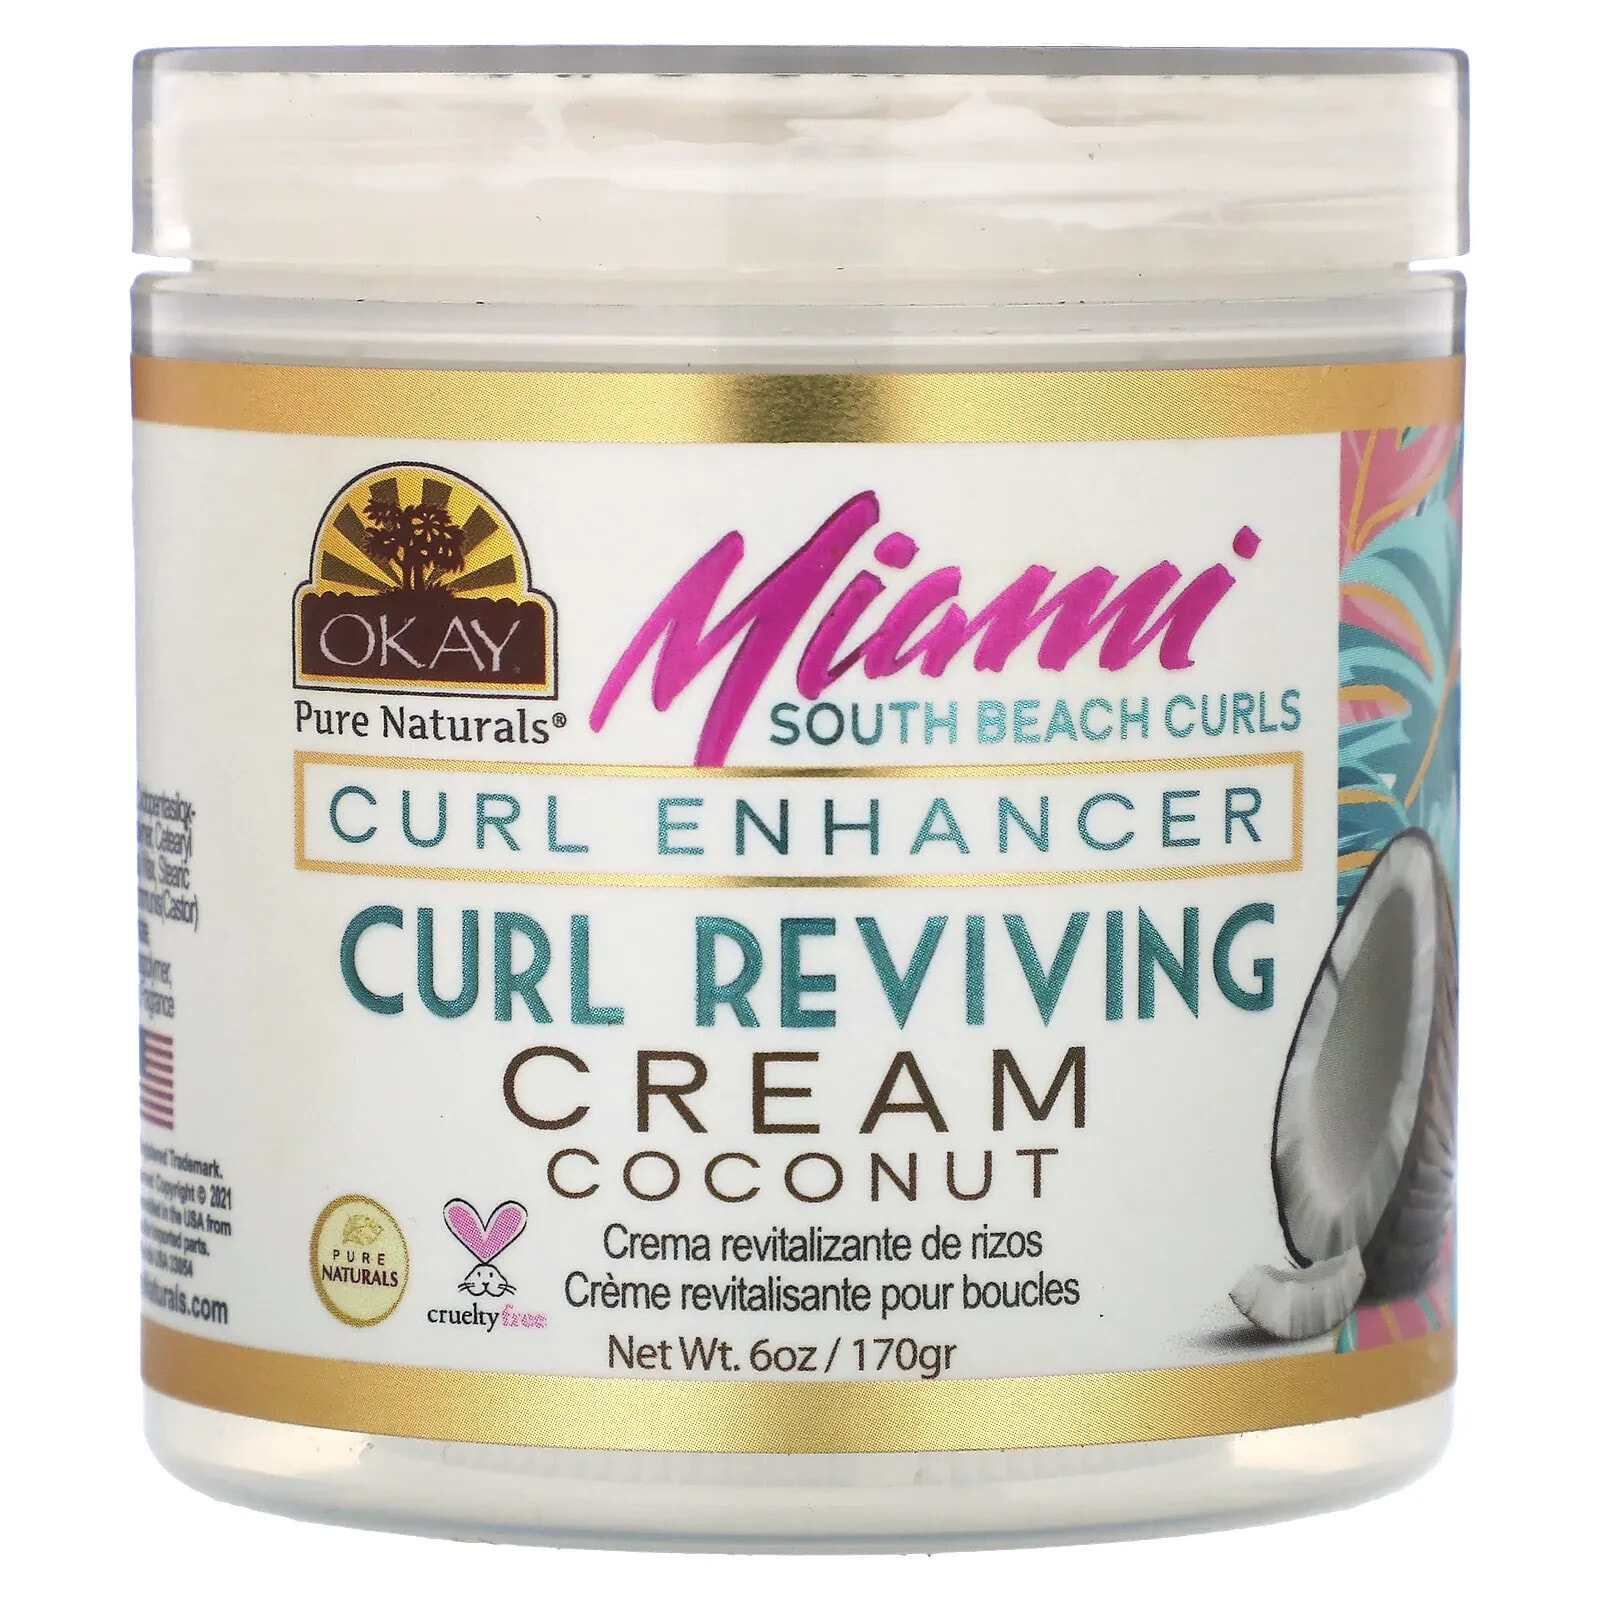 Okay Pure Naturals, Miami South Beach Curls, Curl Enhancer, крем для восстановления локонов, 170 г (6 унций)